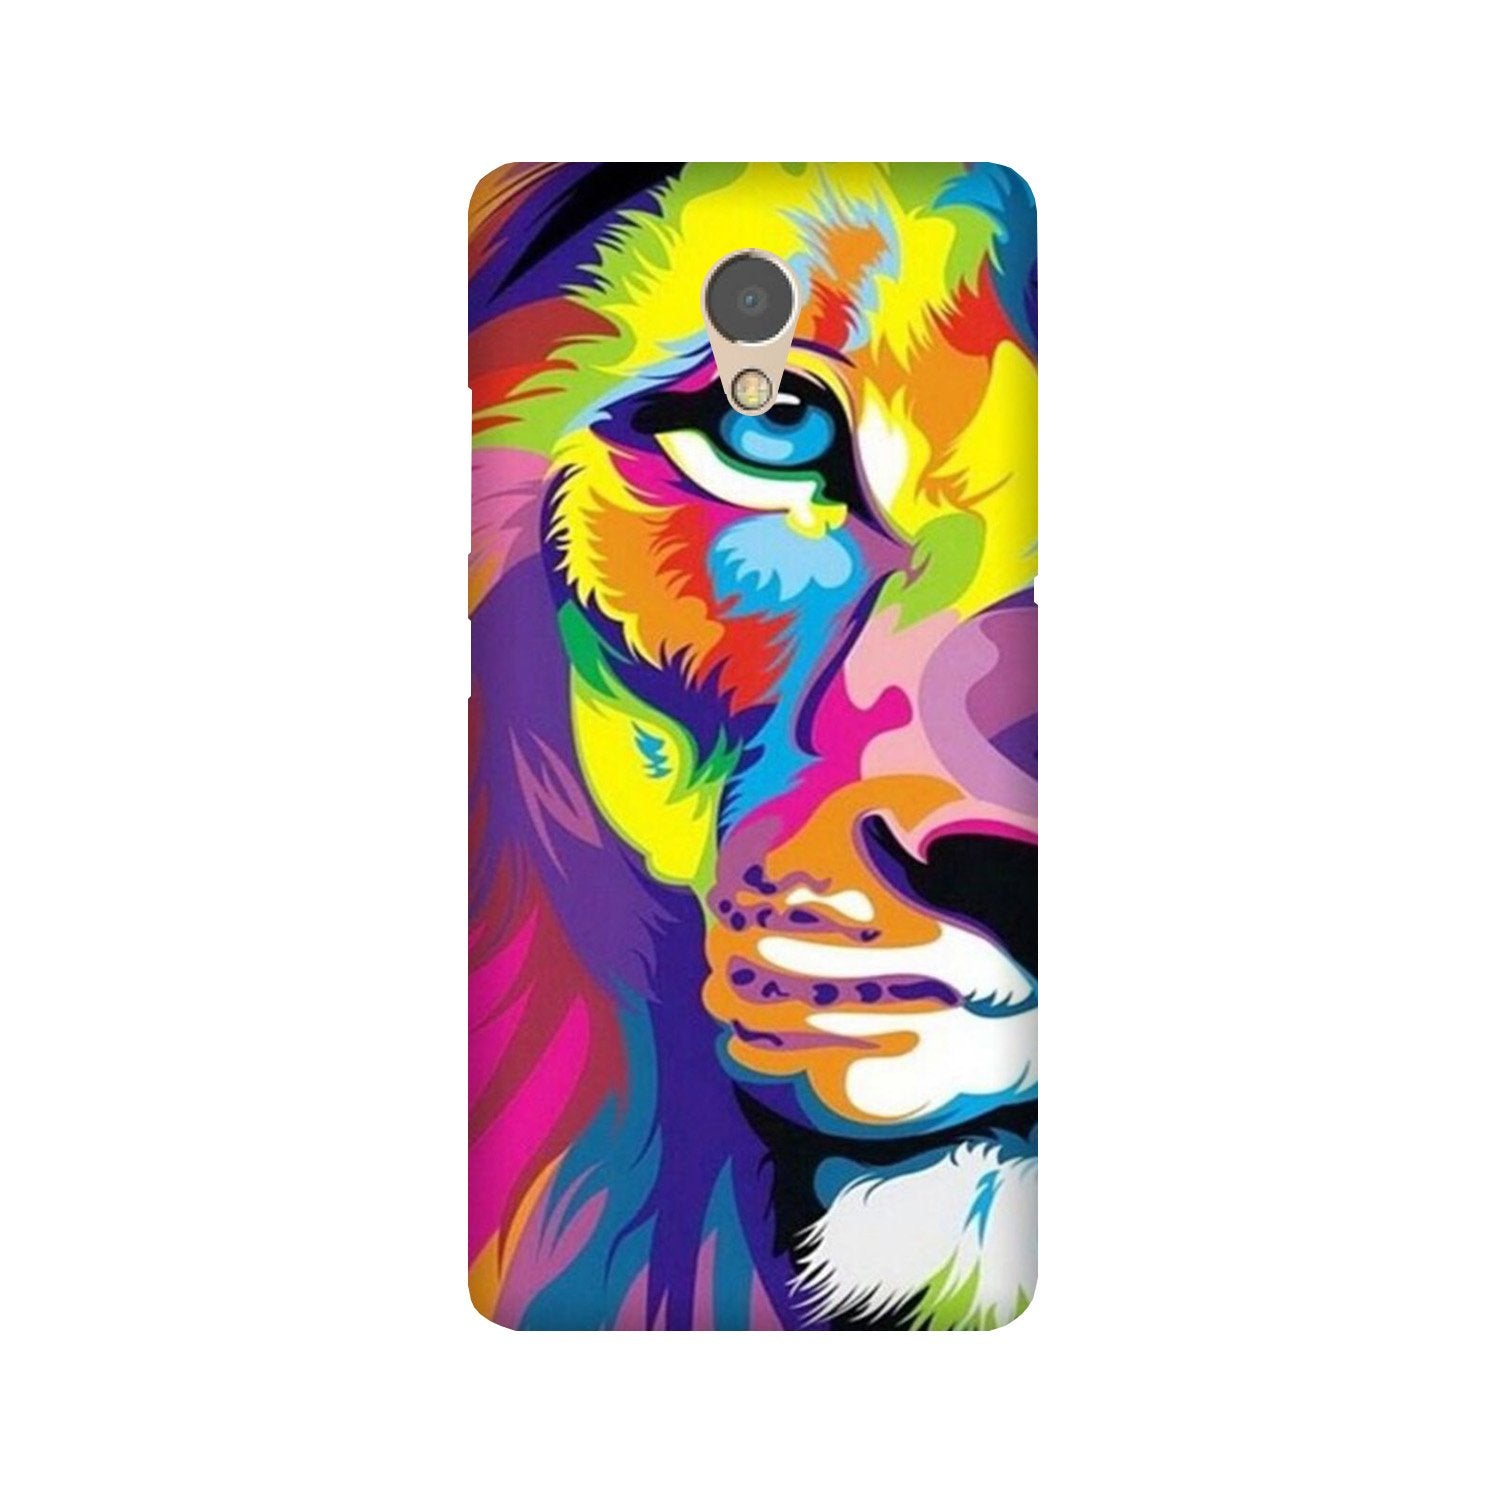 Colorful Lion Case for Lenovo P2(Design - 110)